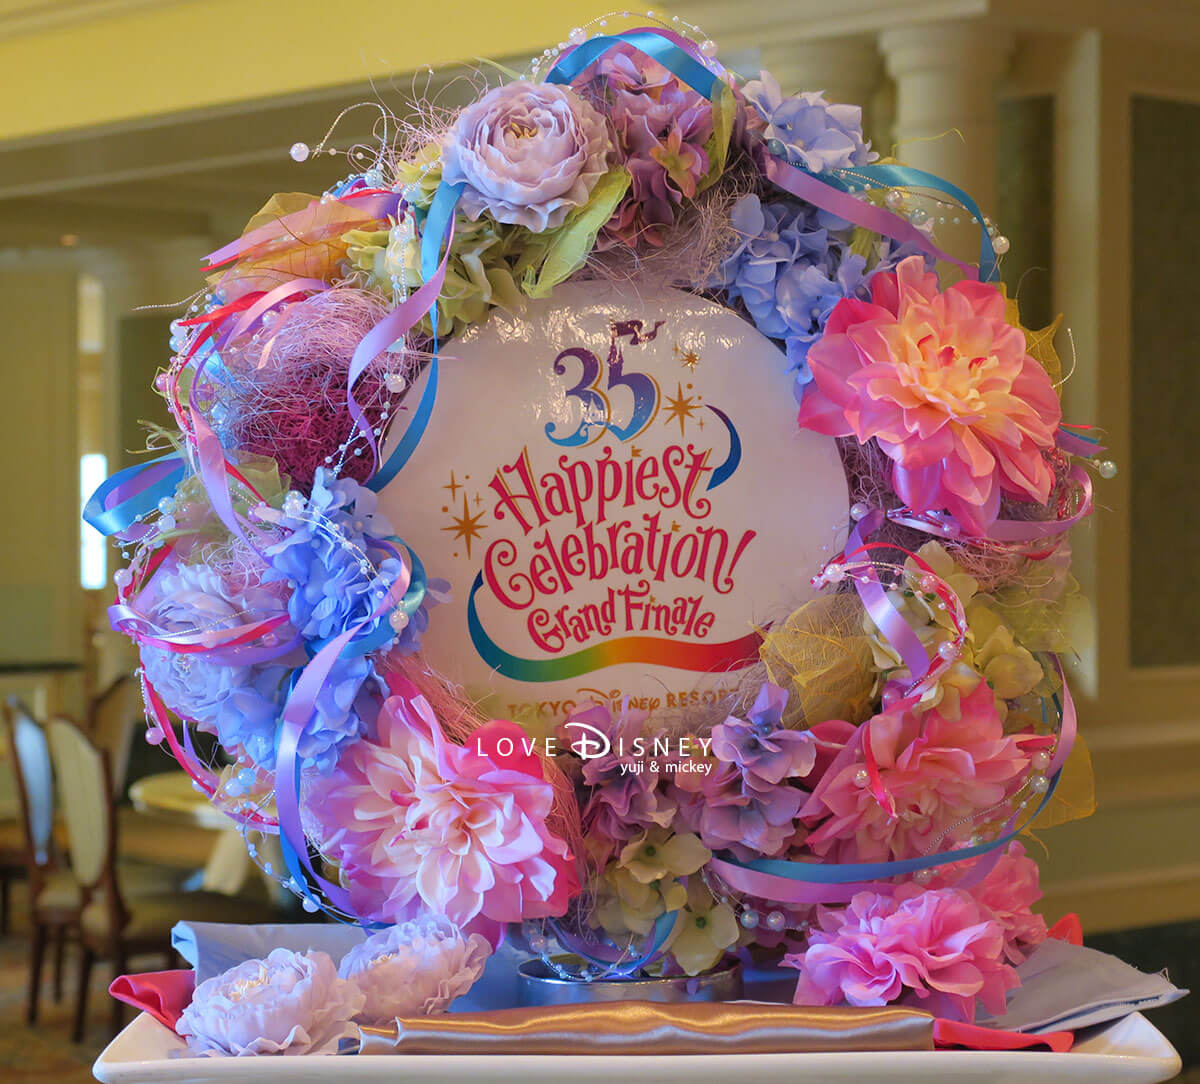 Tokyo Disney Resort 35th「Happiest Celebration!」Grand Finale ランチブッフェのデザート全種類紹介